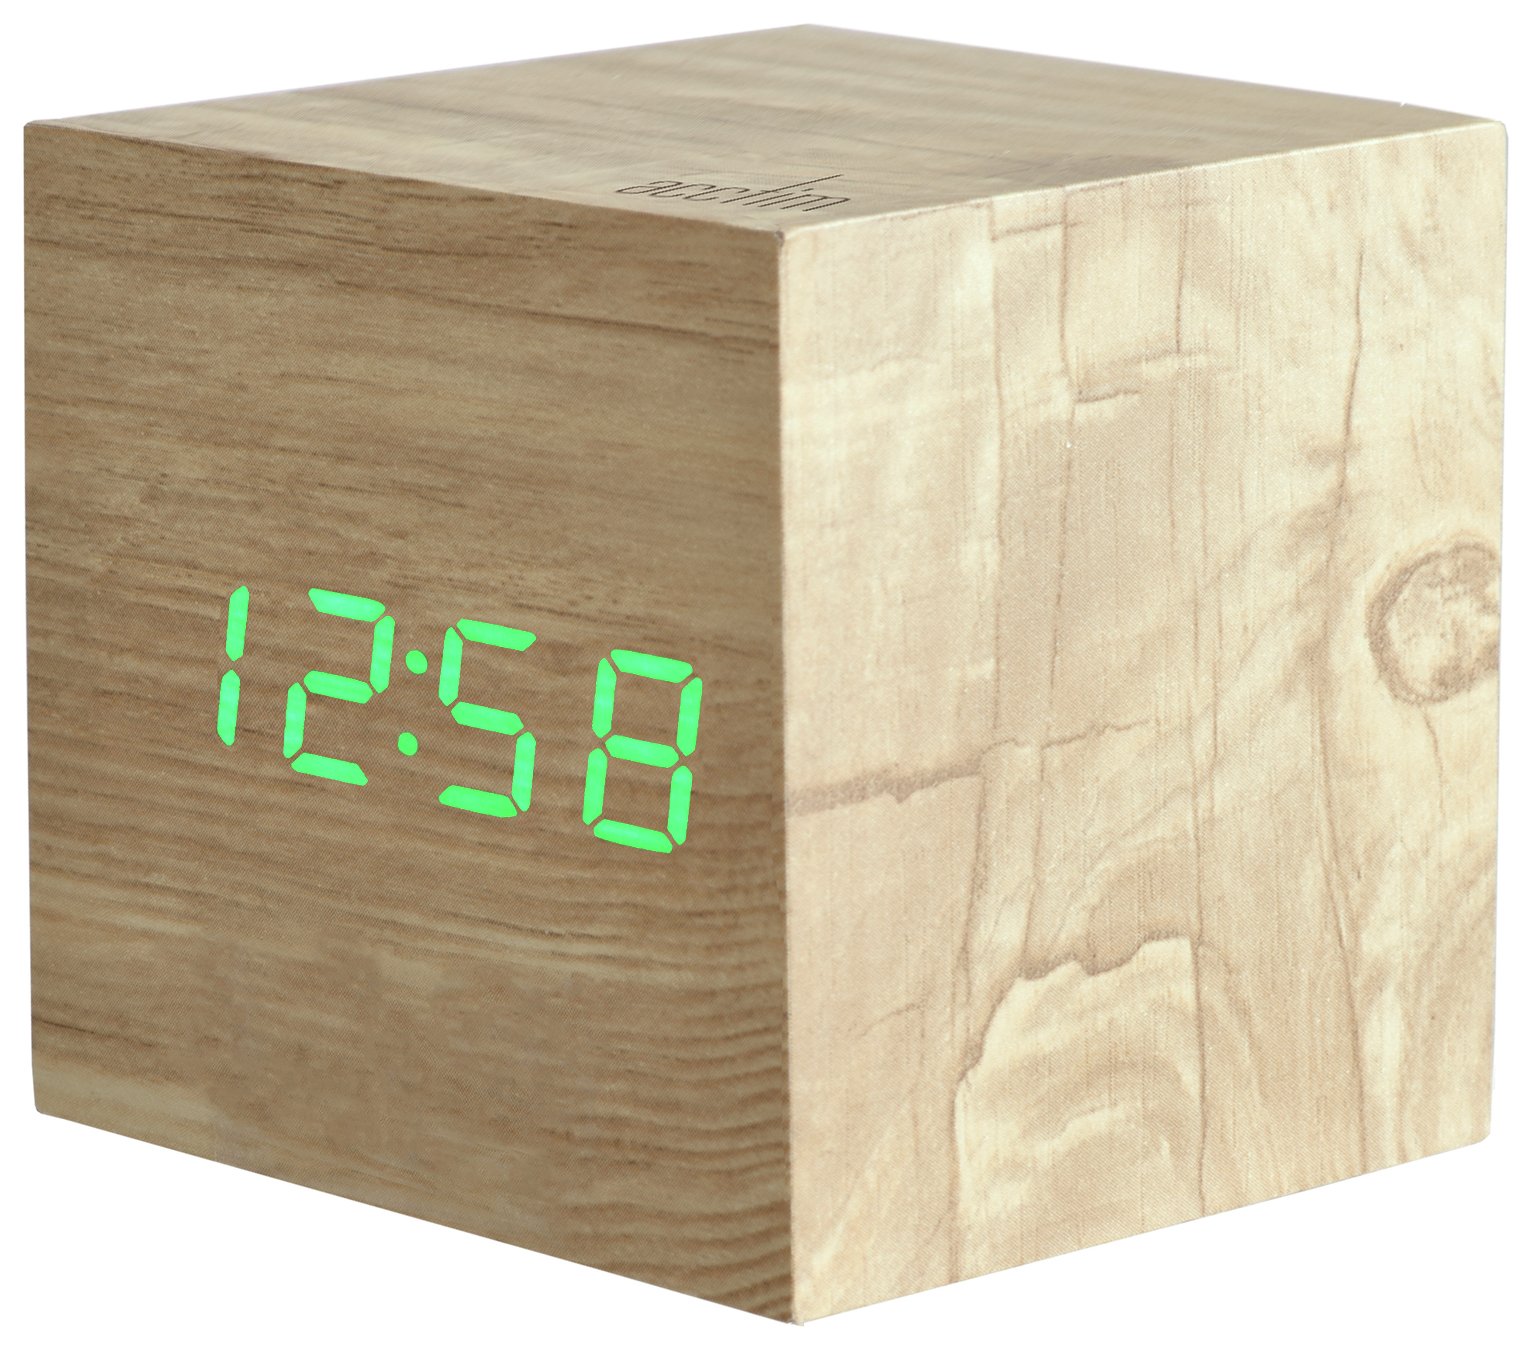 Acctim Digital Alarm Clock - Ash Wood